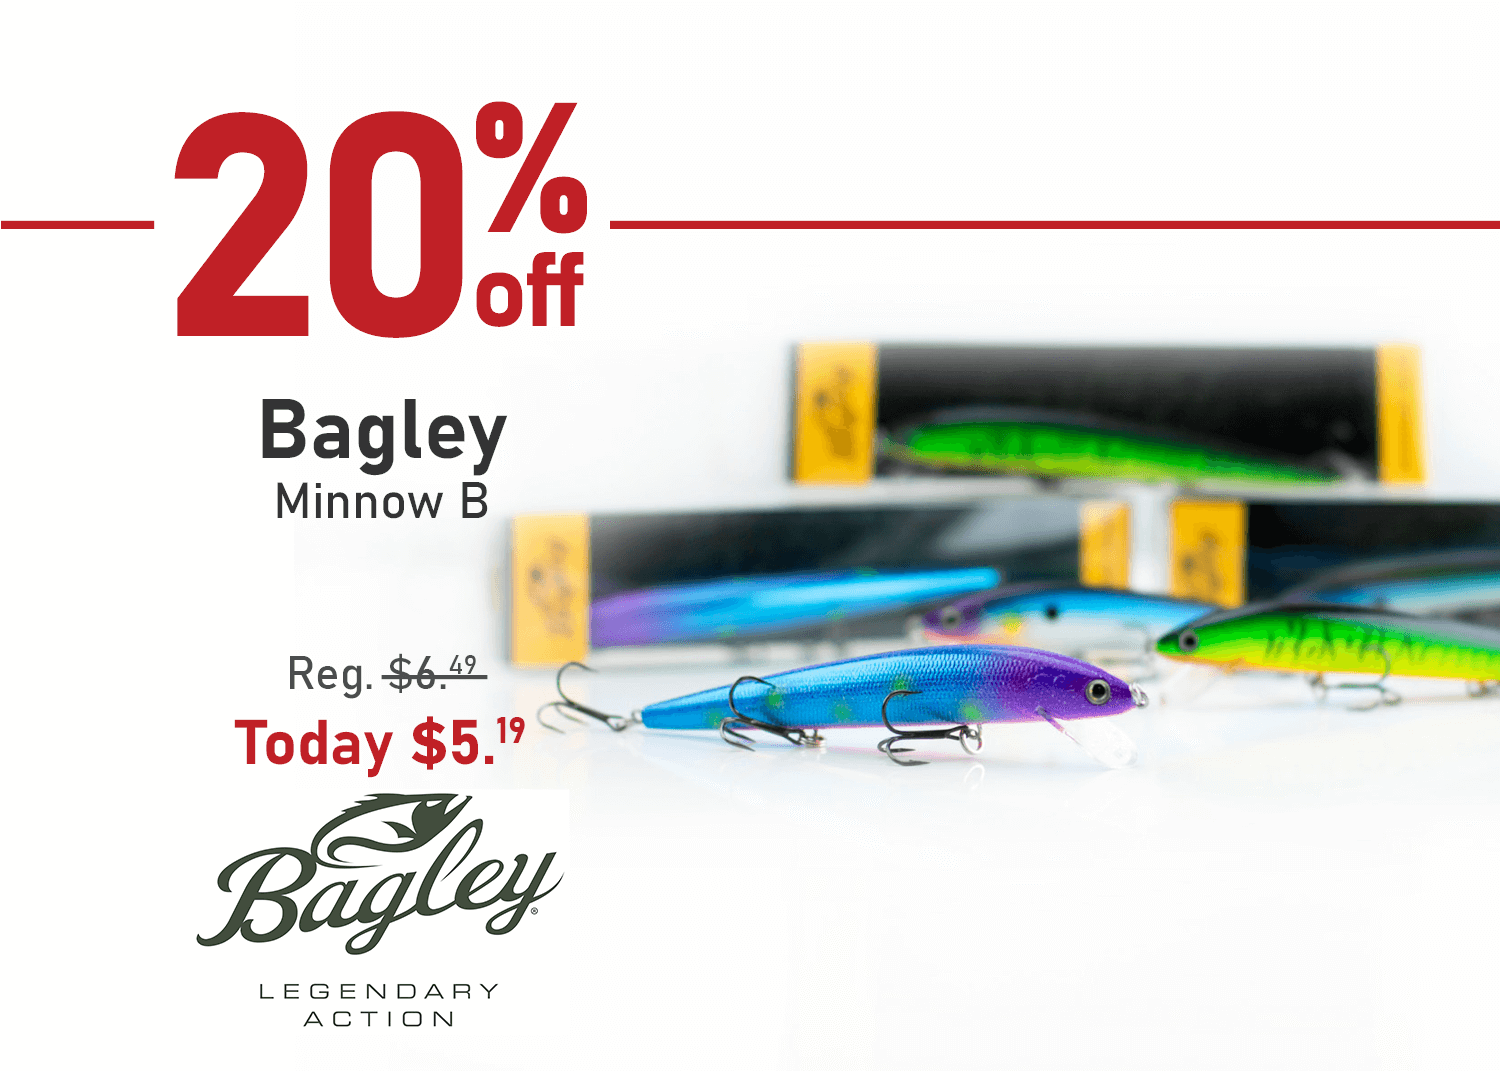 Save 20% on the Bagley Minnow B